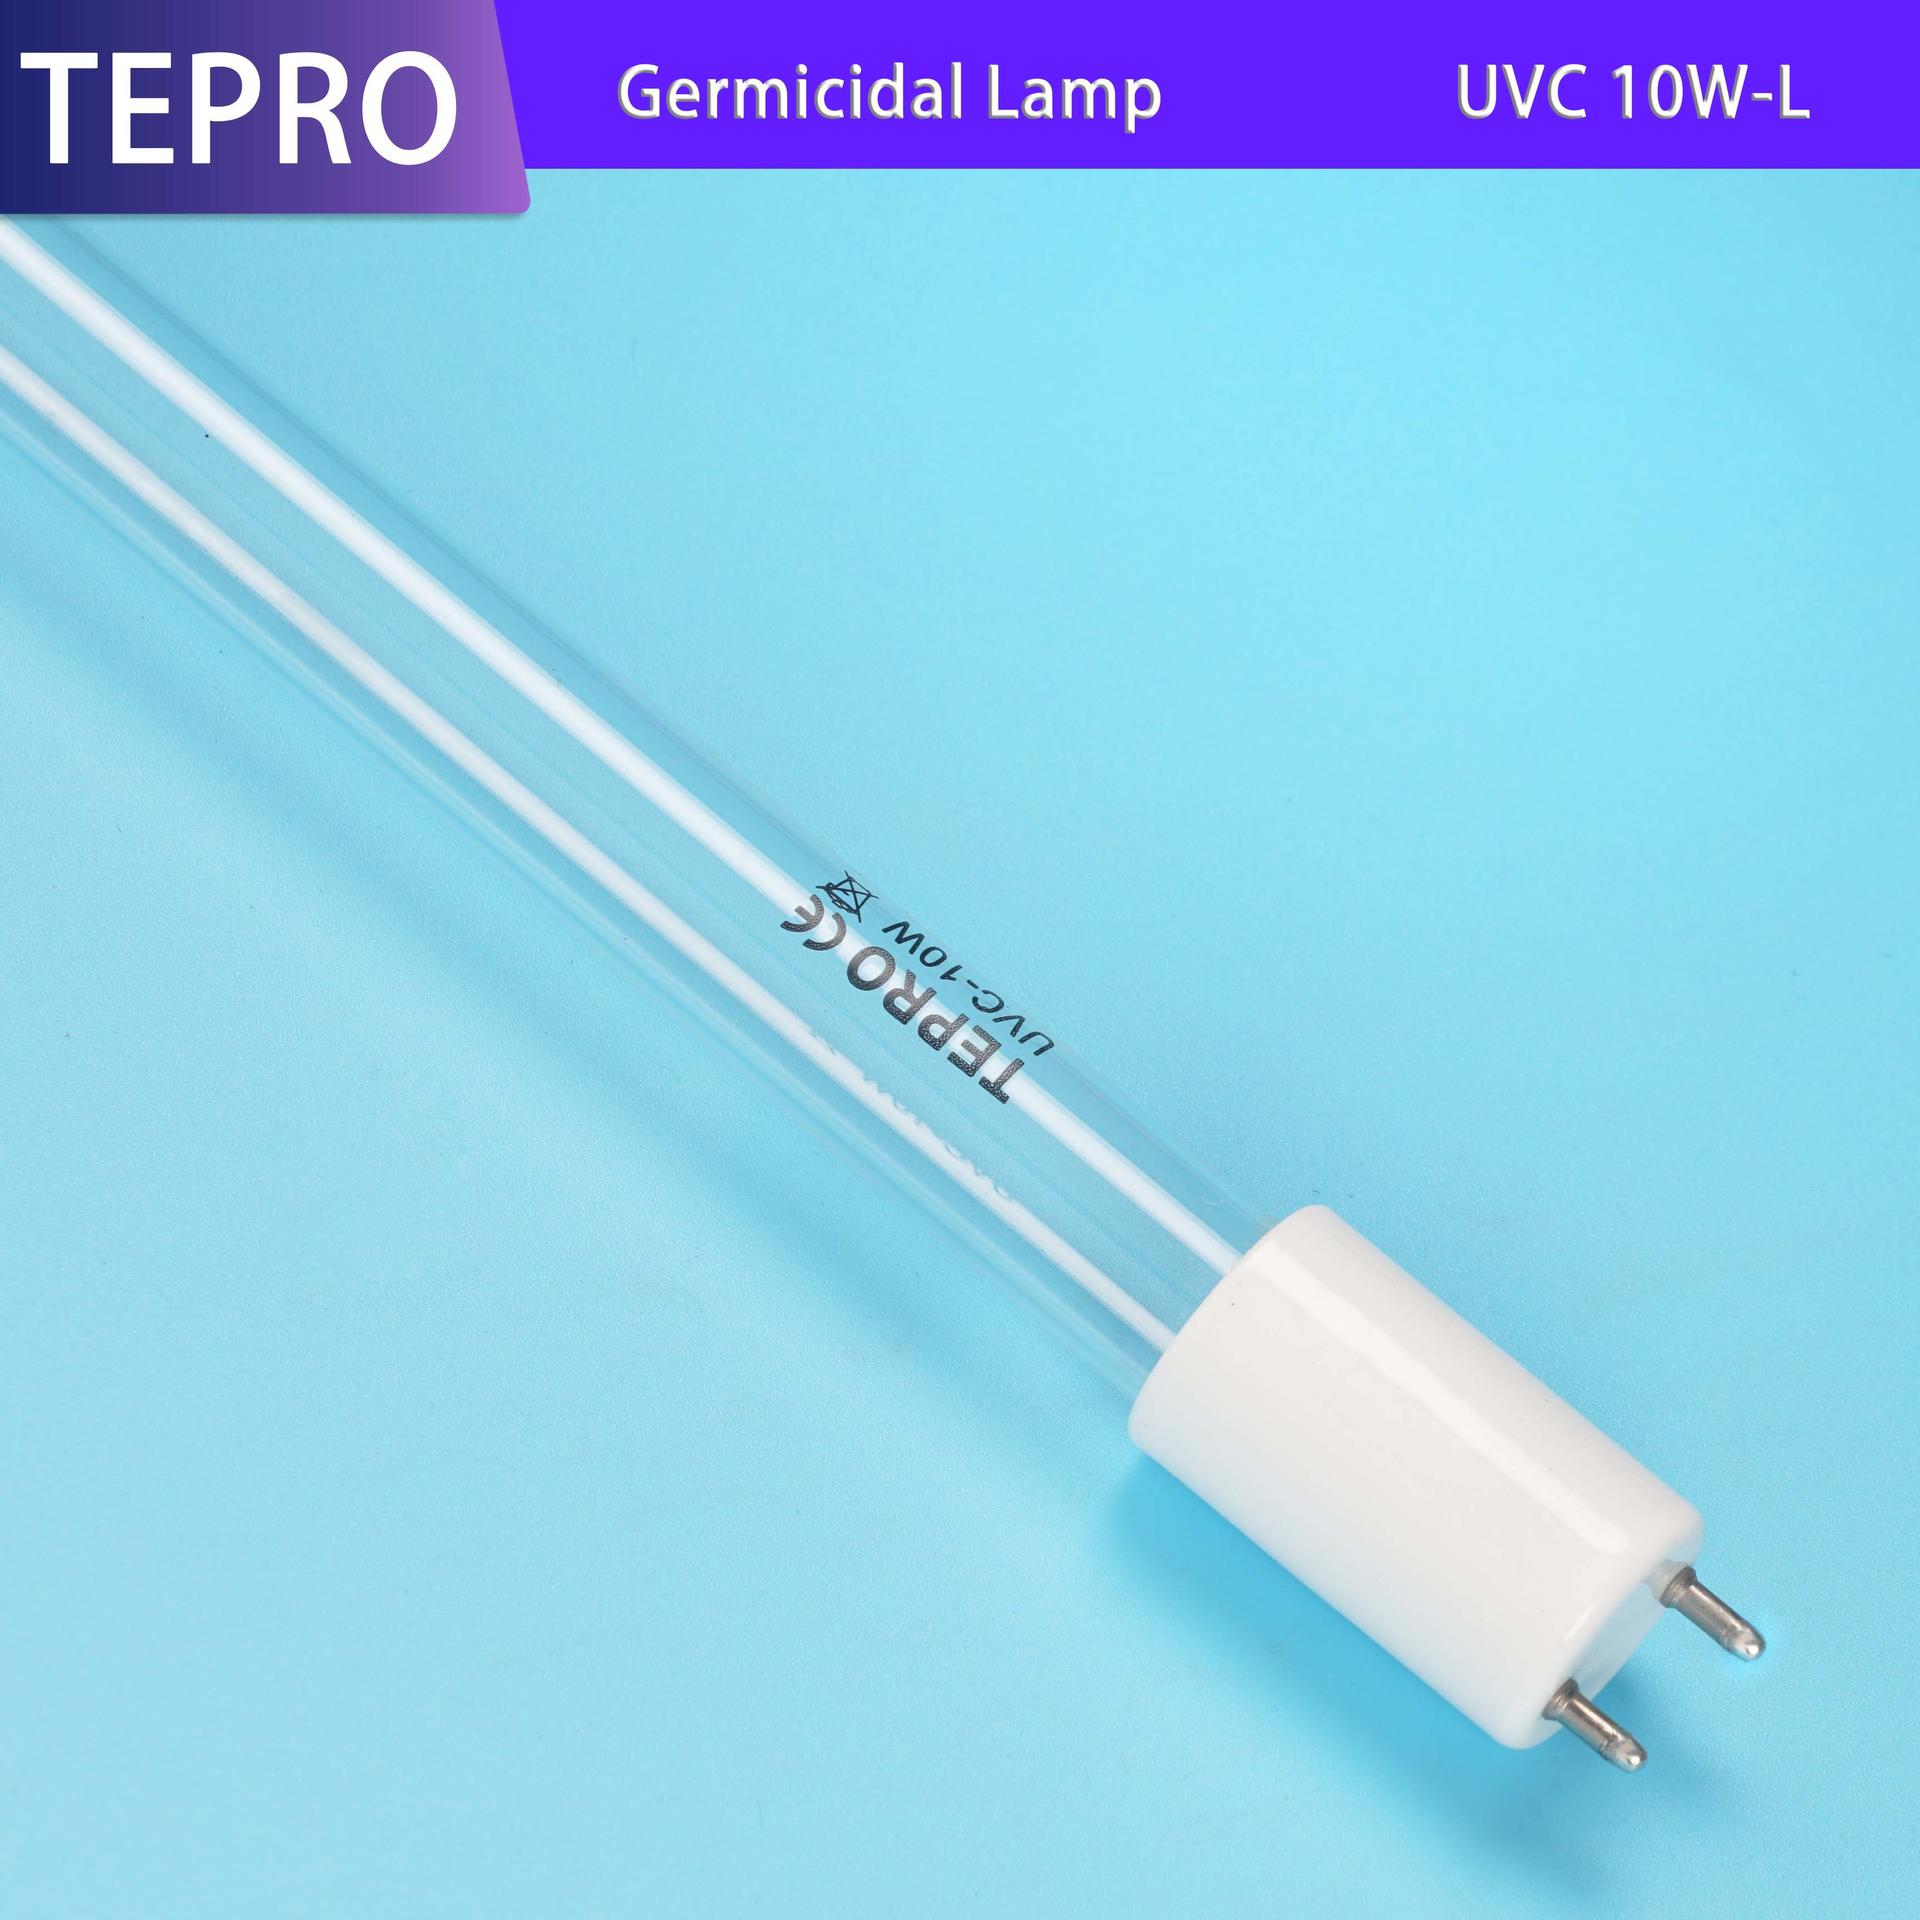 10W Double Ended Sterilization Lamp UVC 10W-L